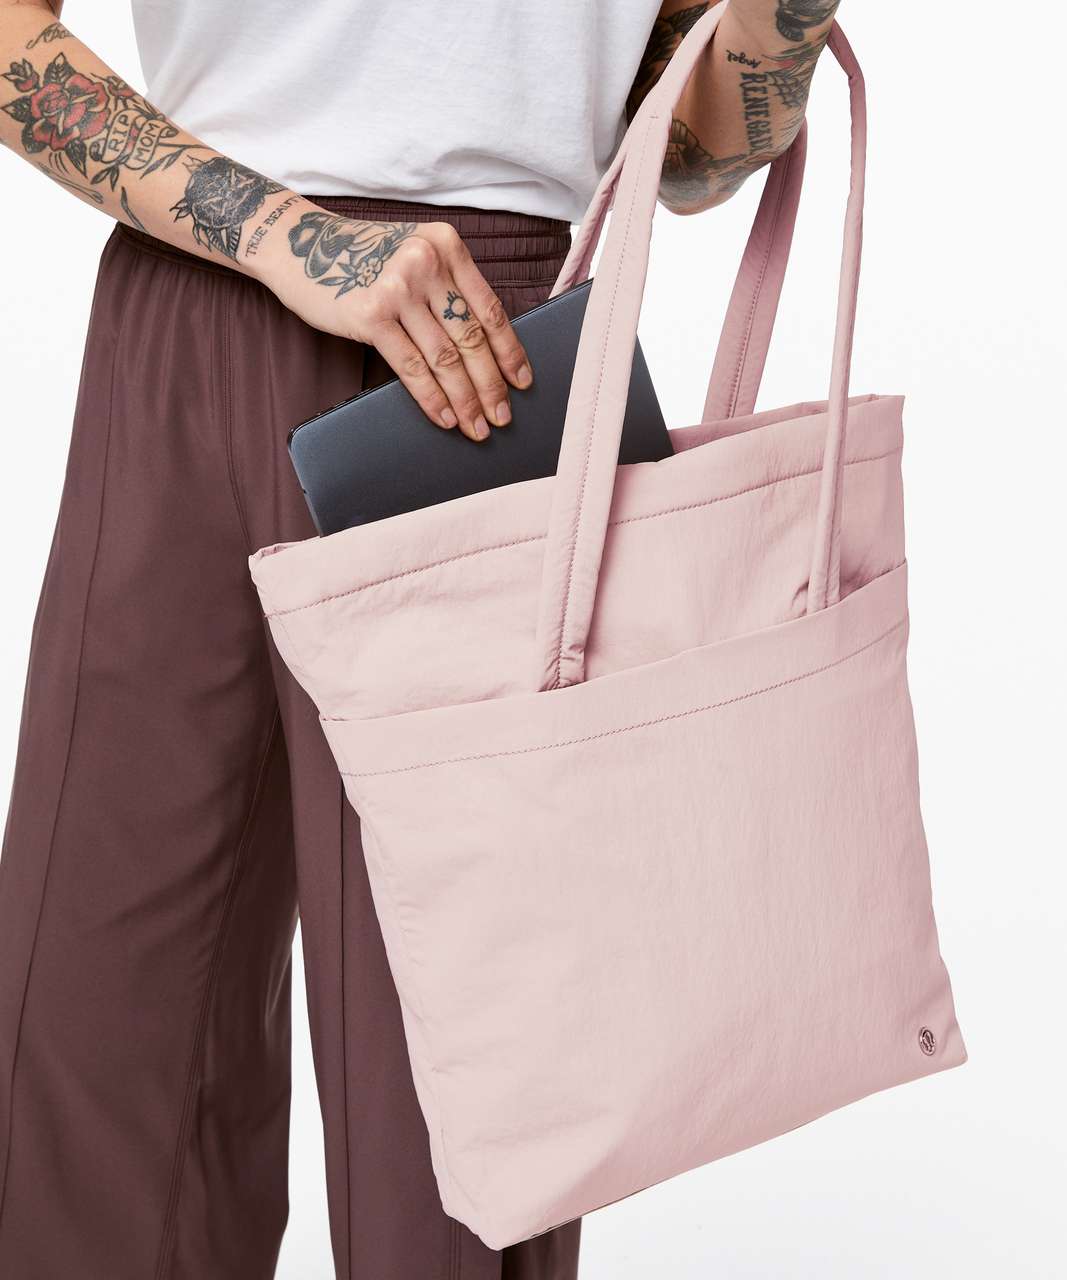 Lululemon Shopping Bags – Lululemon Comes to usc